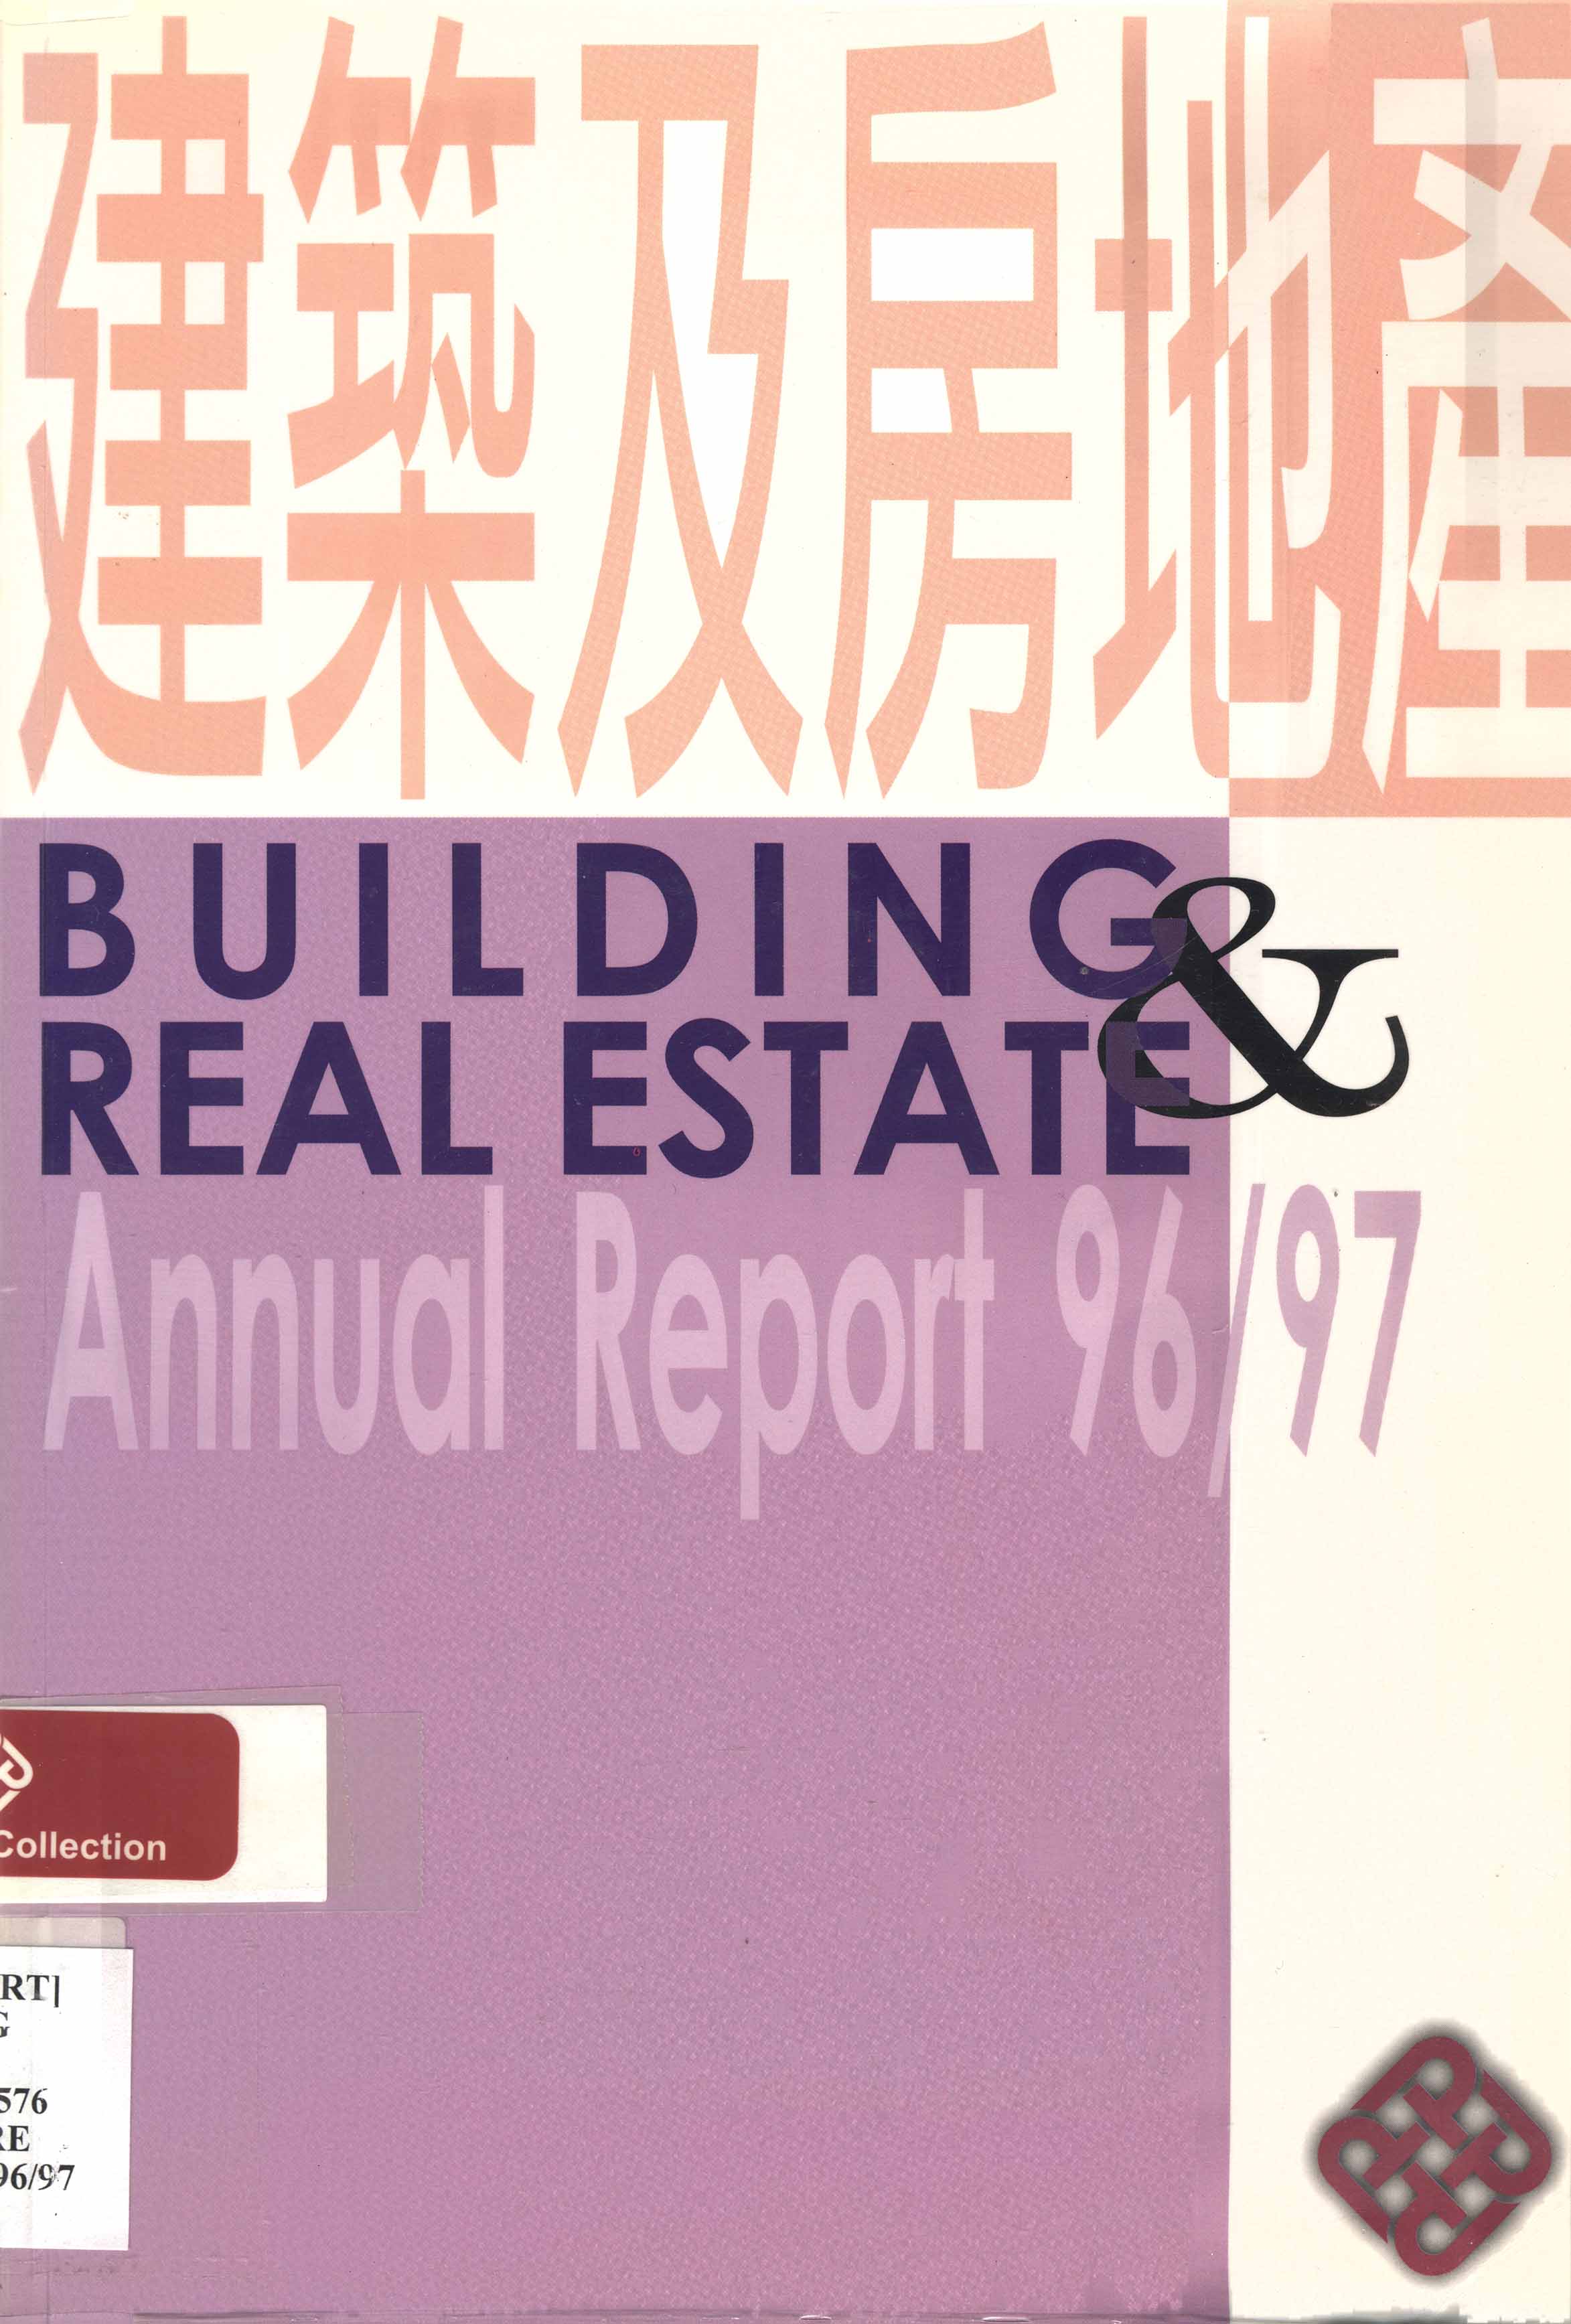 Building & real estate annual report 96/97